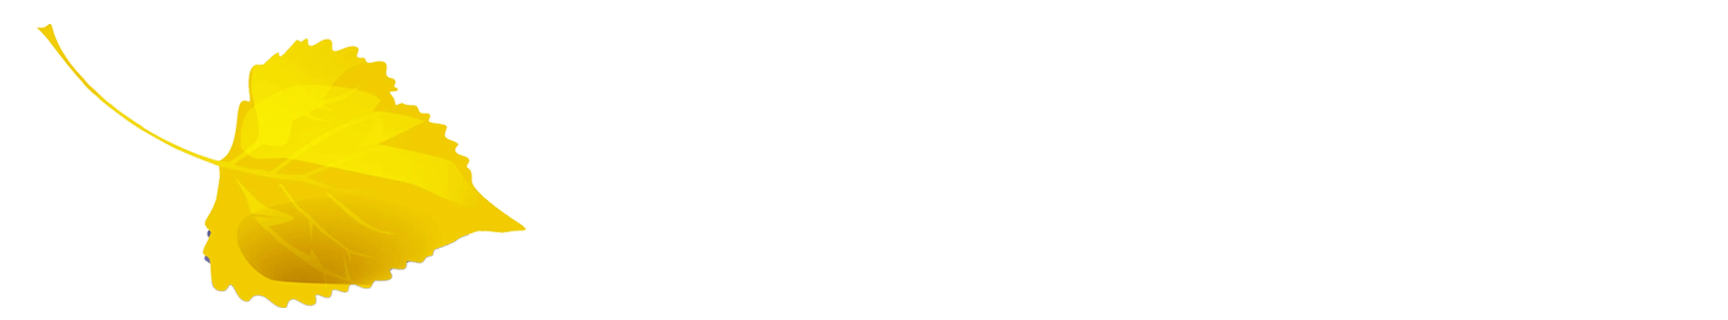 Special District Association of Colorado Logo